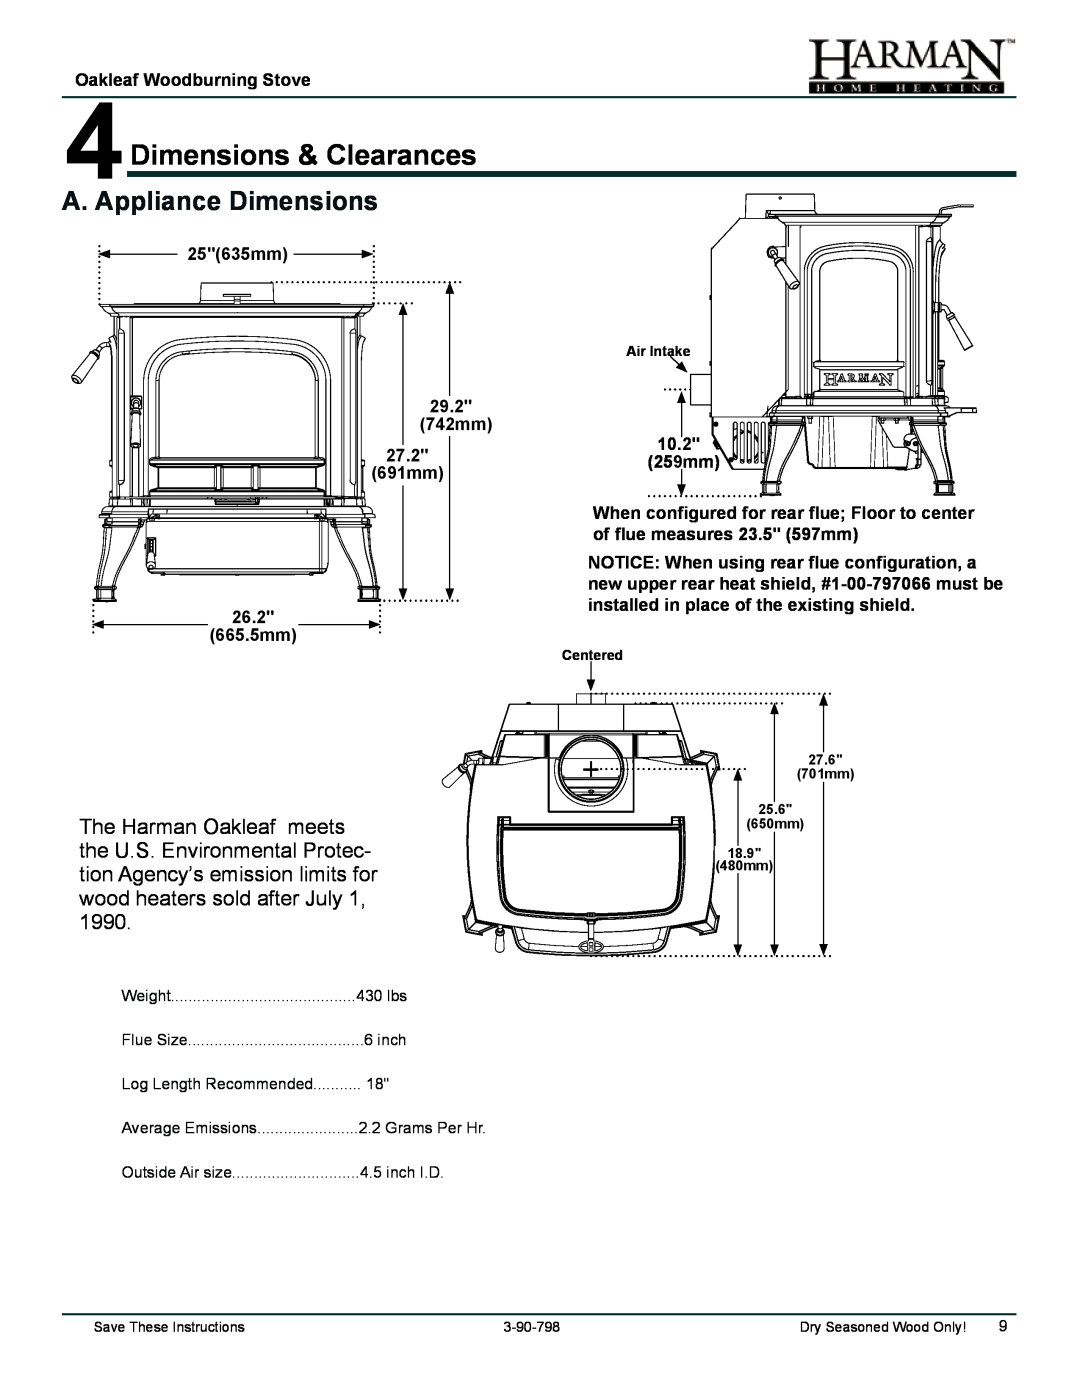 Harman Stove Company 1-90-797000 manual 4Dimensions & Clearances, A. Appliance Dimensions 